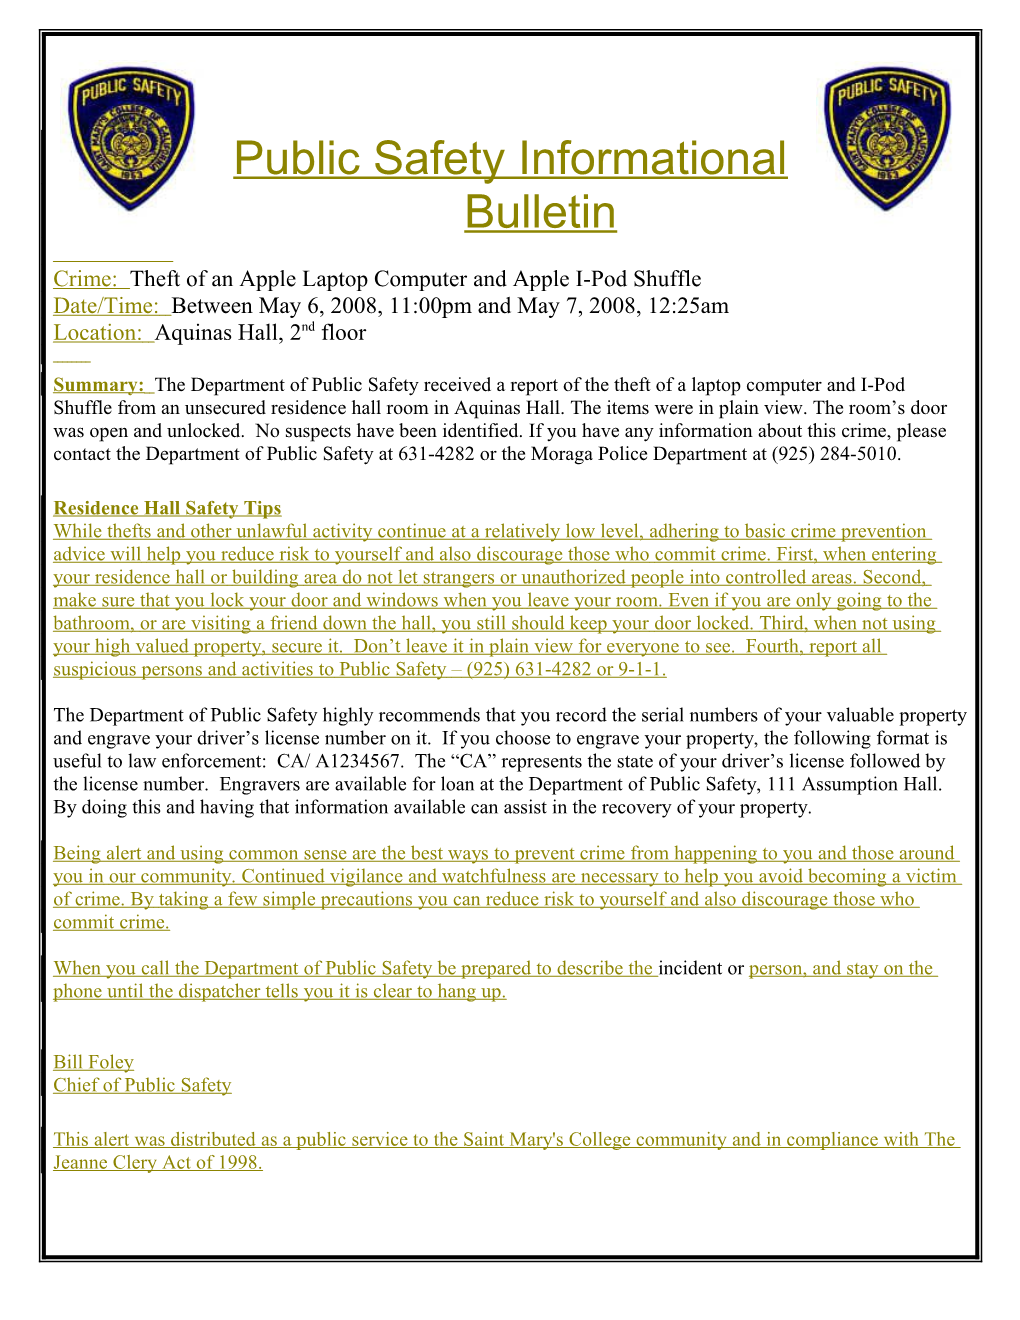 Public Safety Informational Bulletin